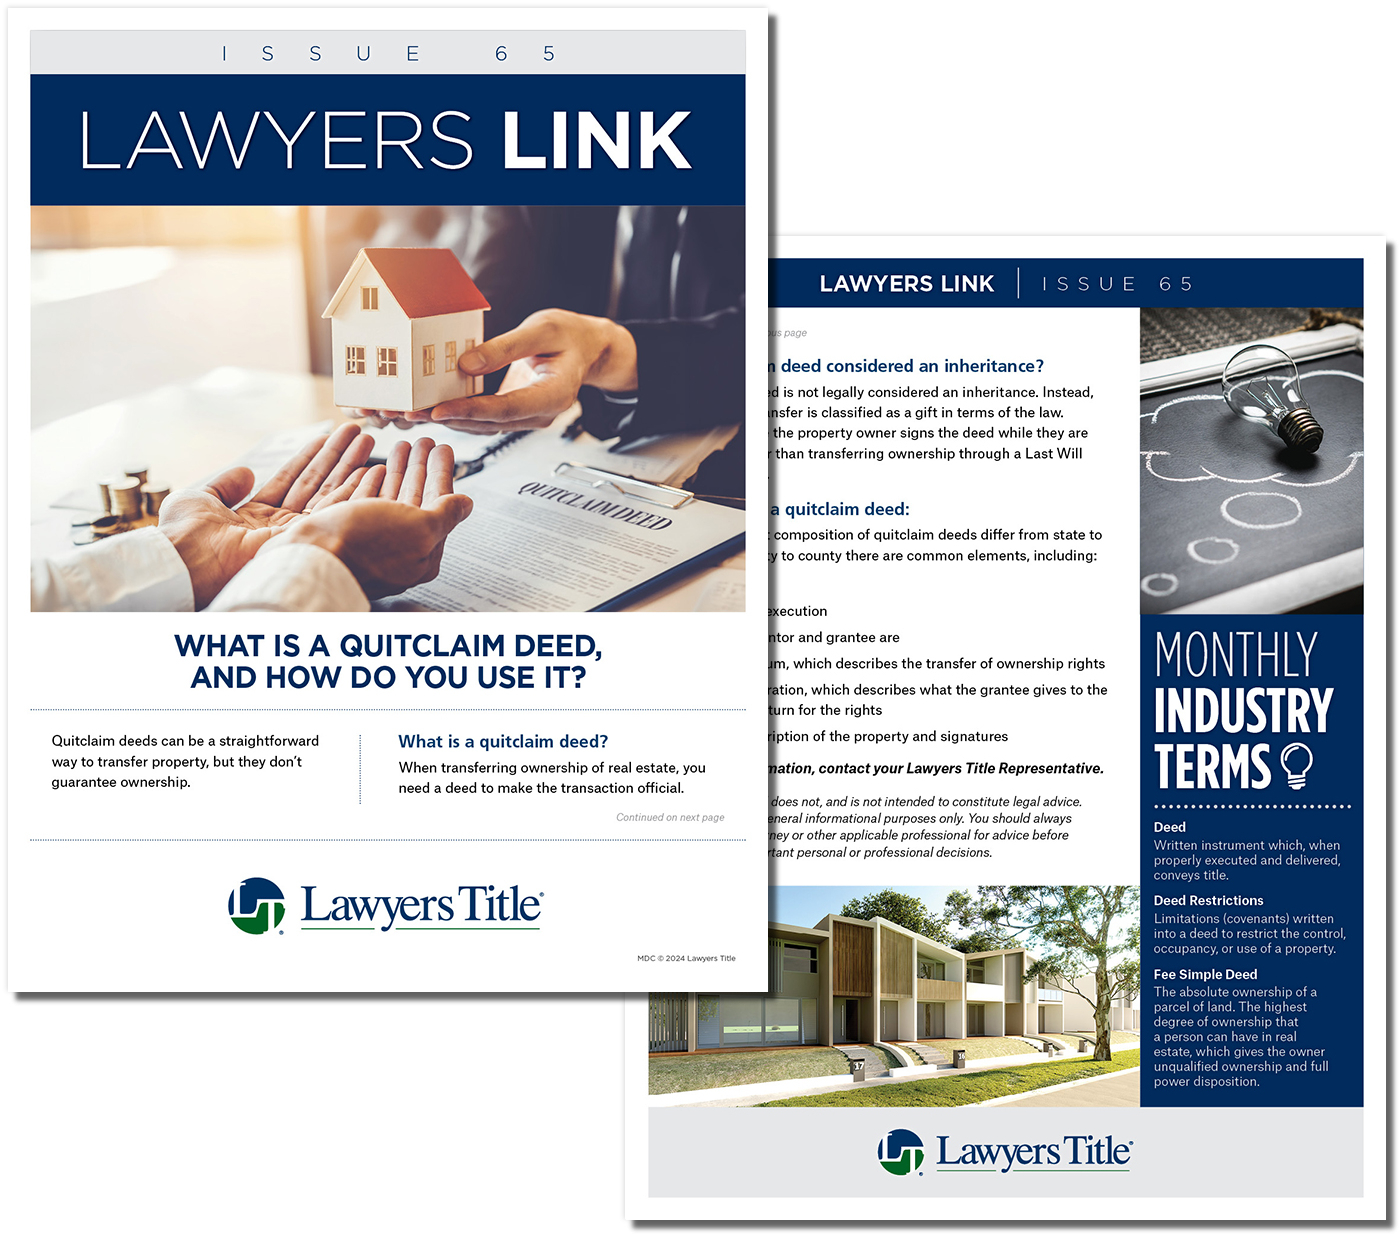 LawyersLink